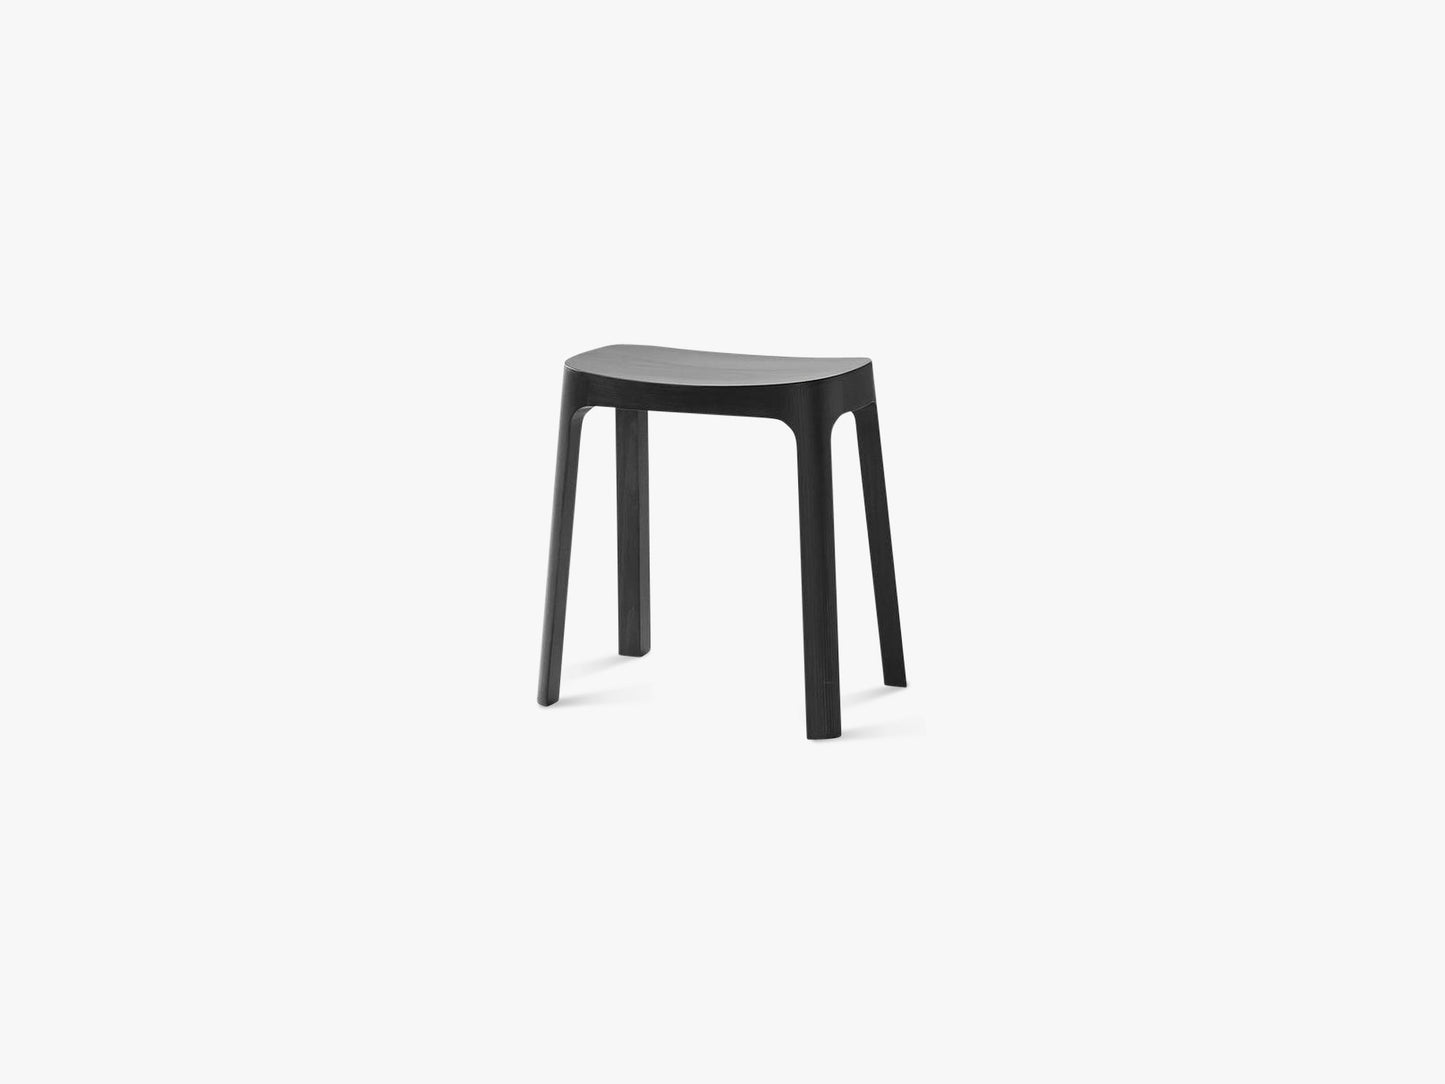 CROFTON stool - SH45, stained black pine wood